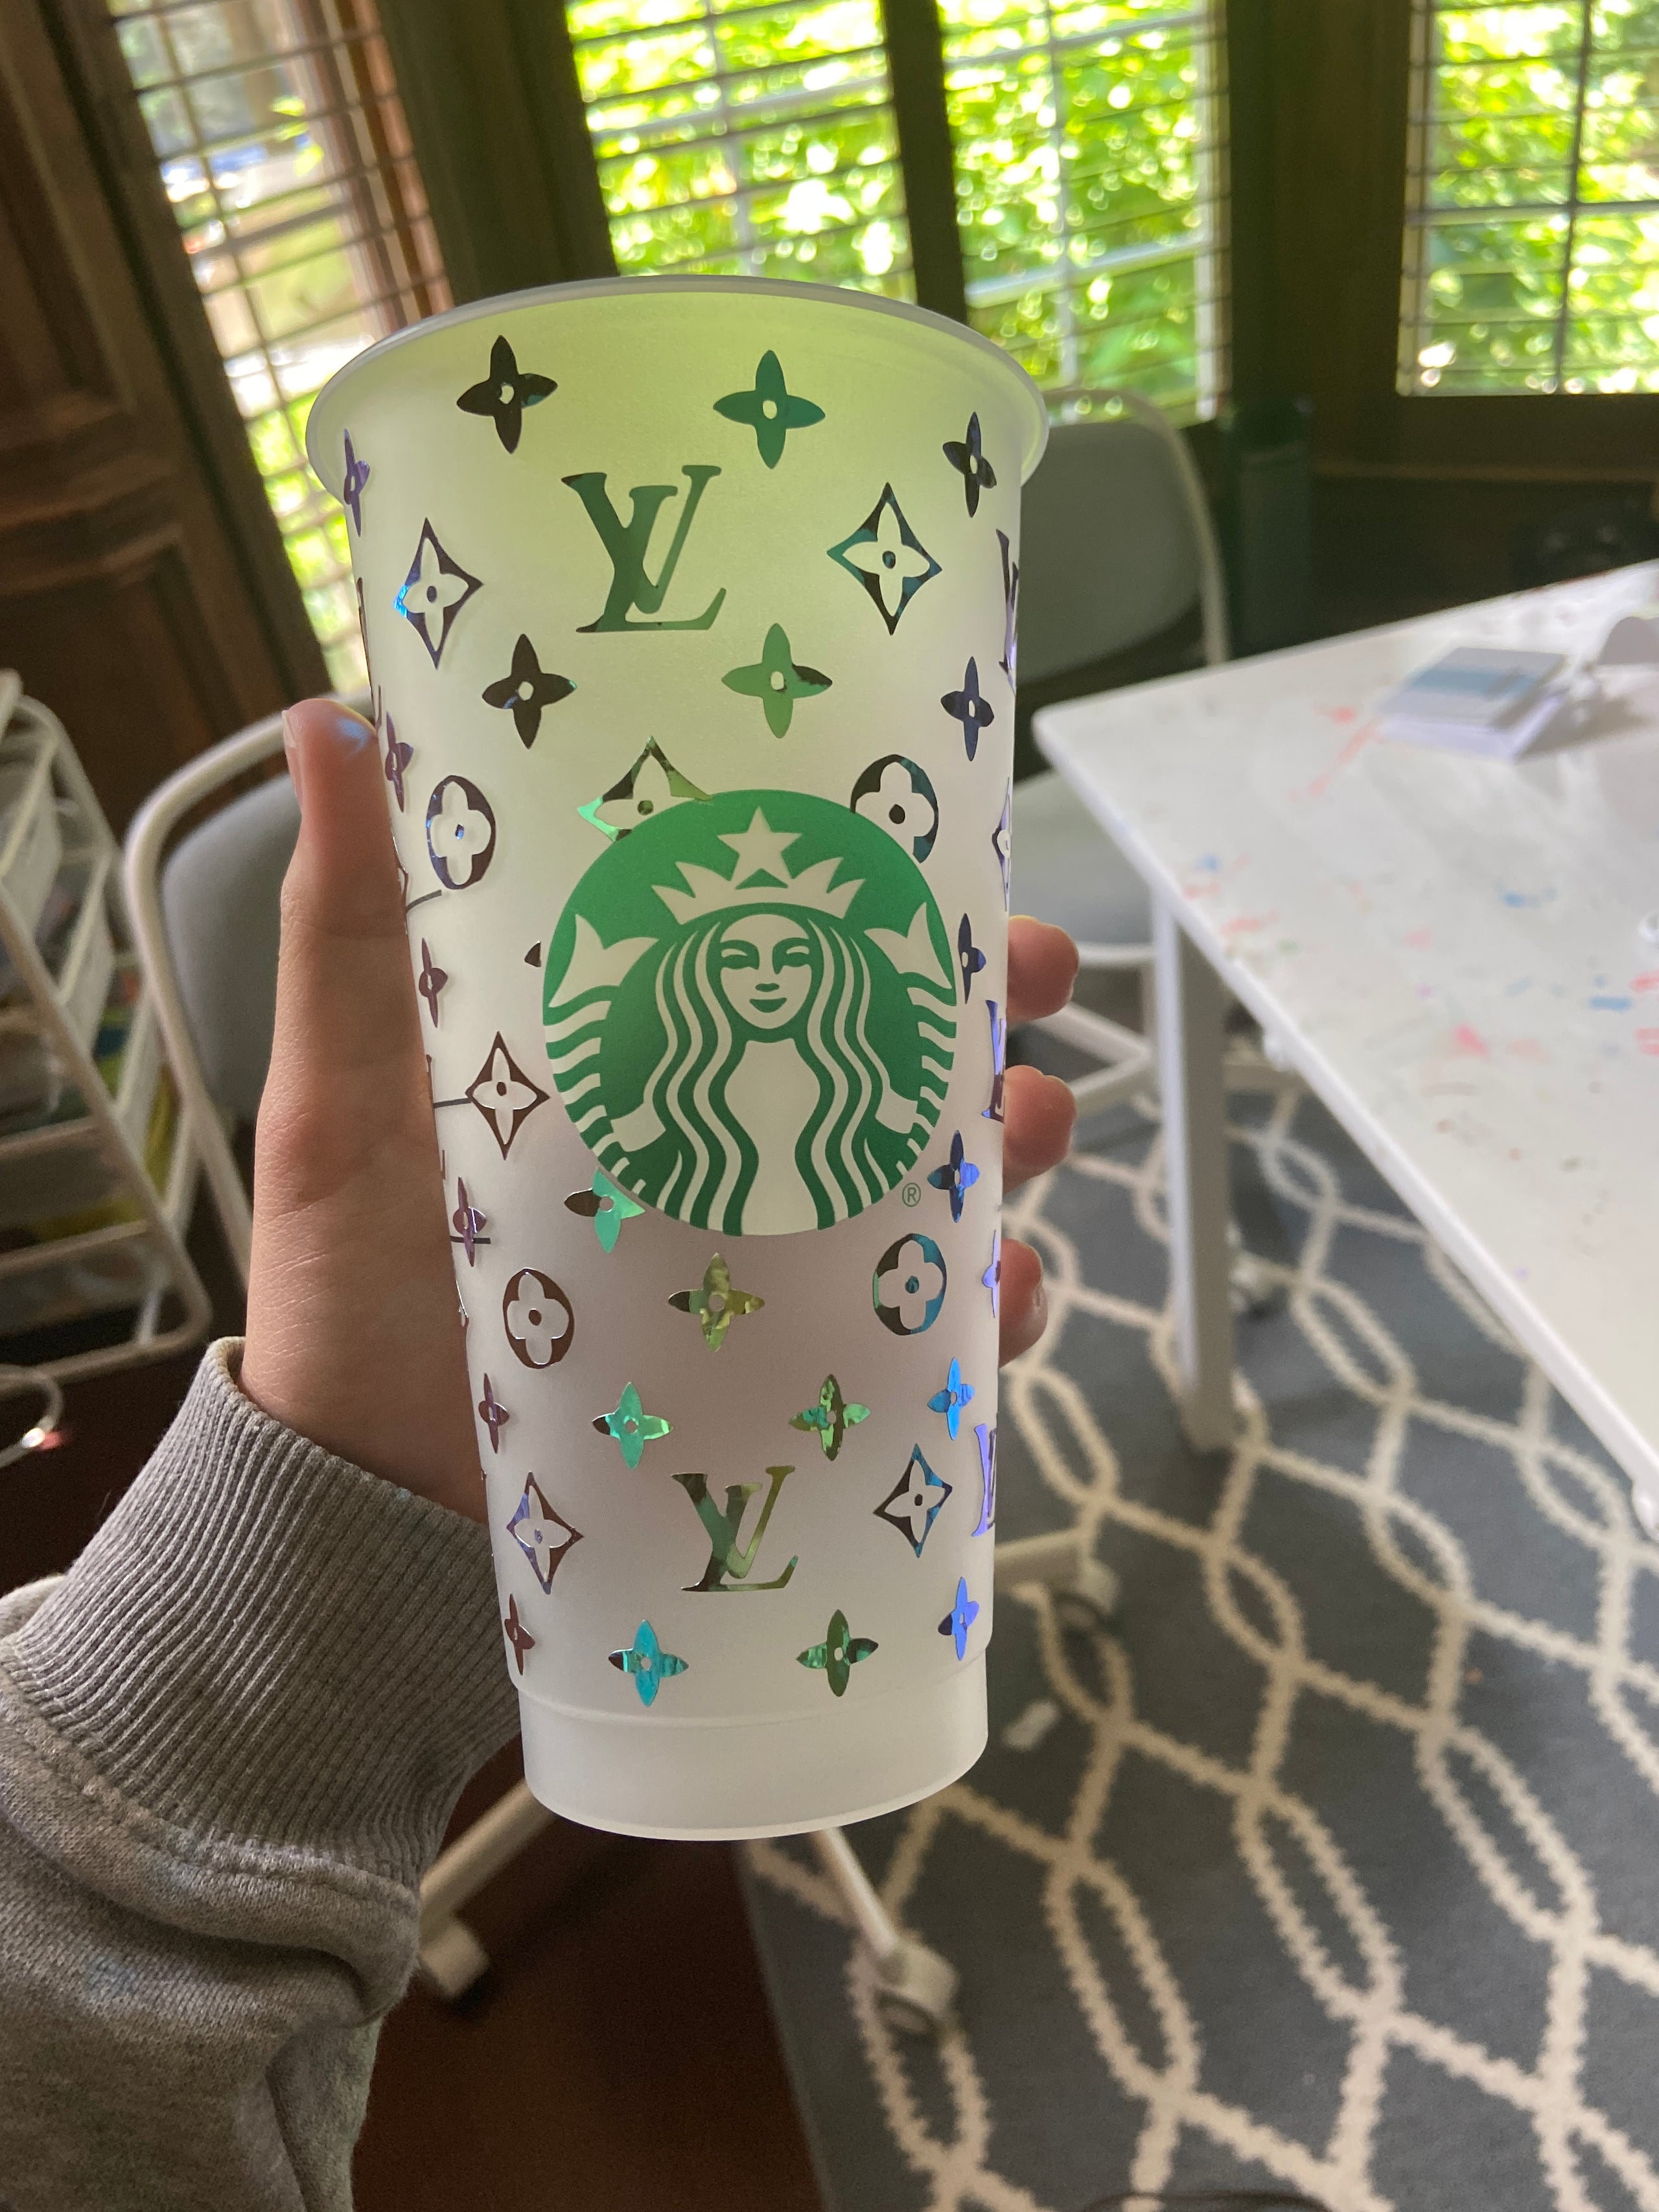 Louis Vuitton personalizes Starbucks cup #starbucks